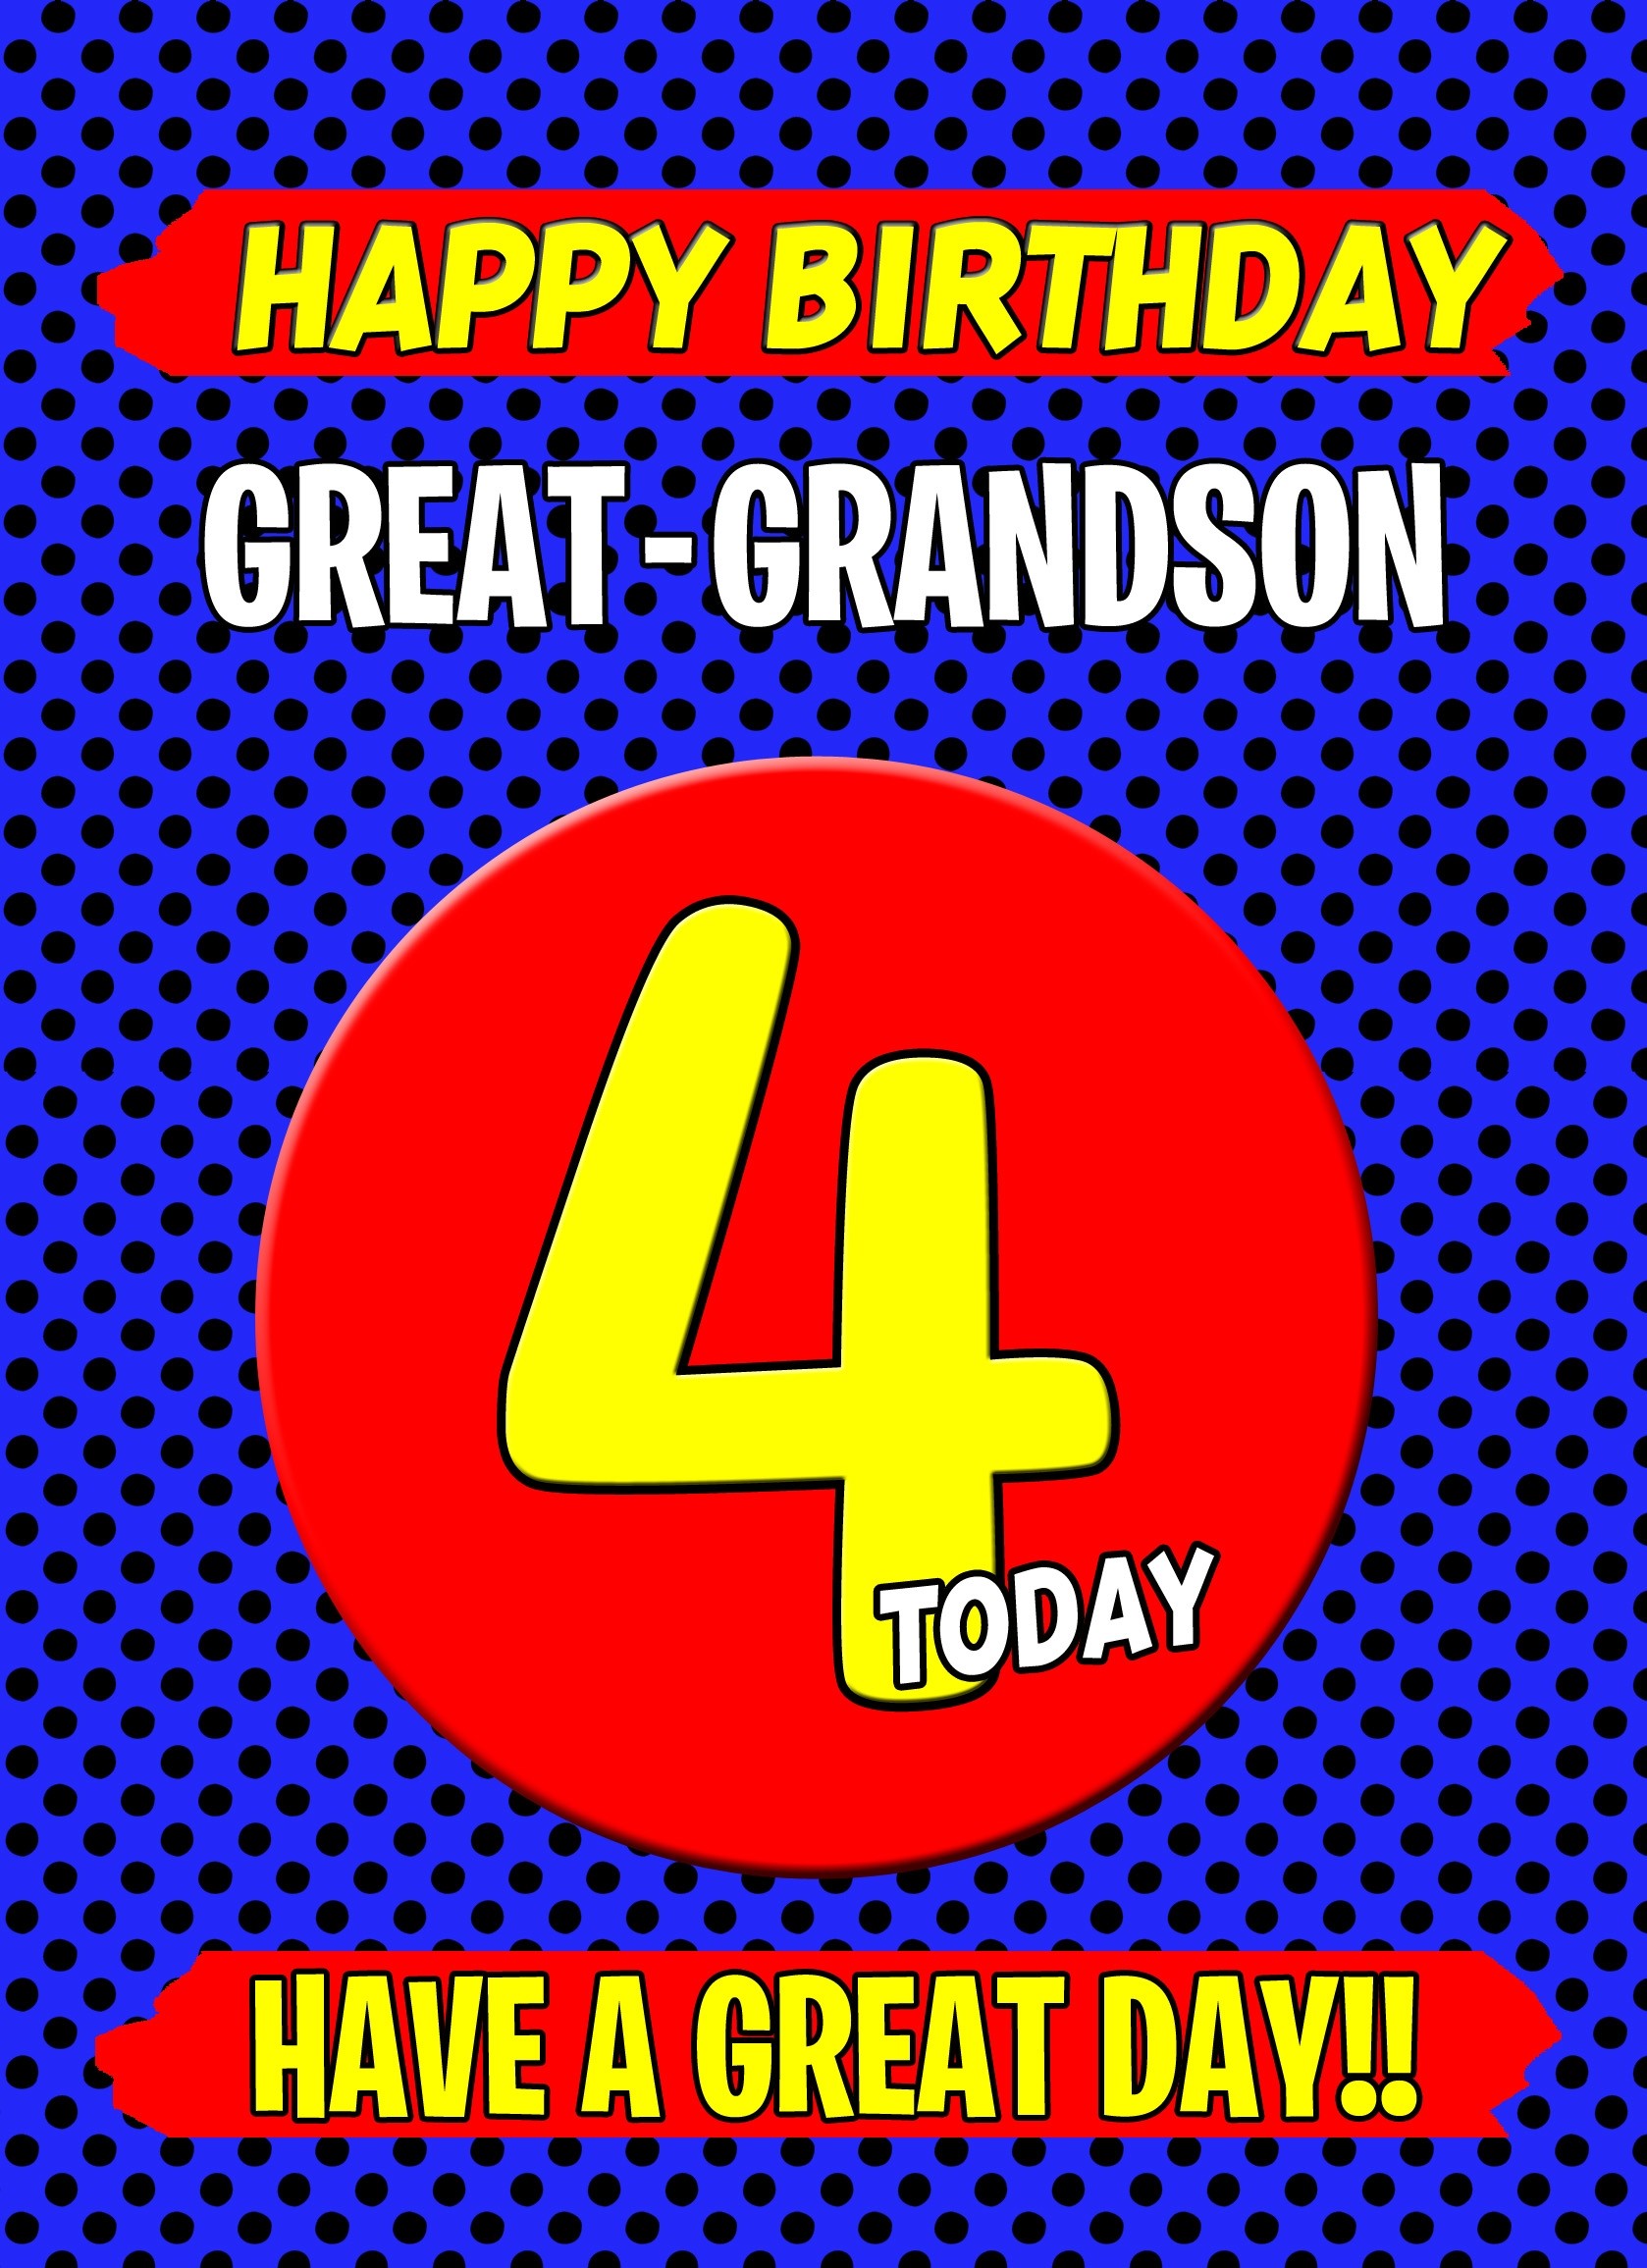 Great Grandson 4th Birthday Card (Blue)